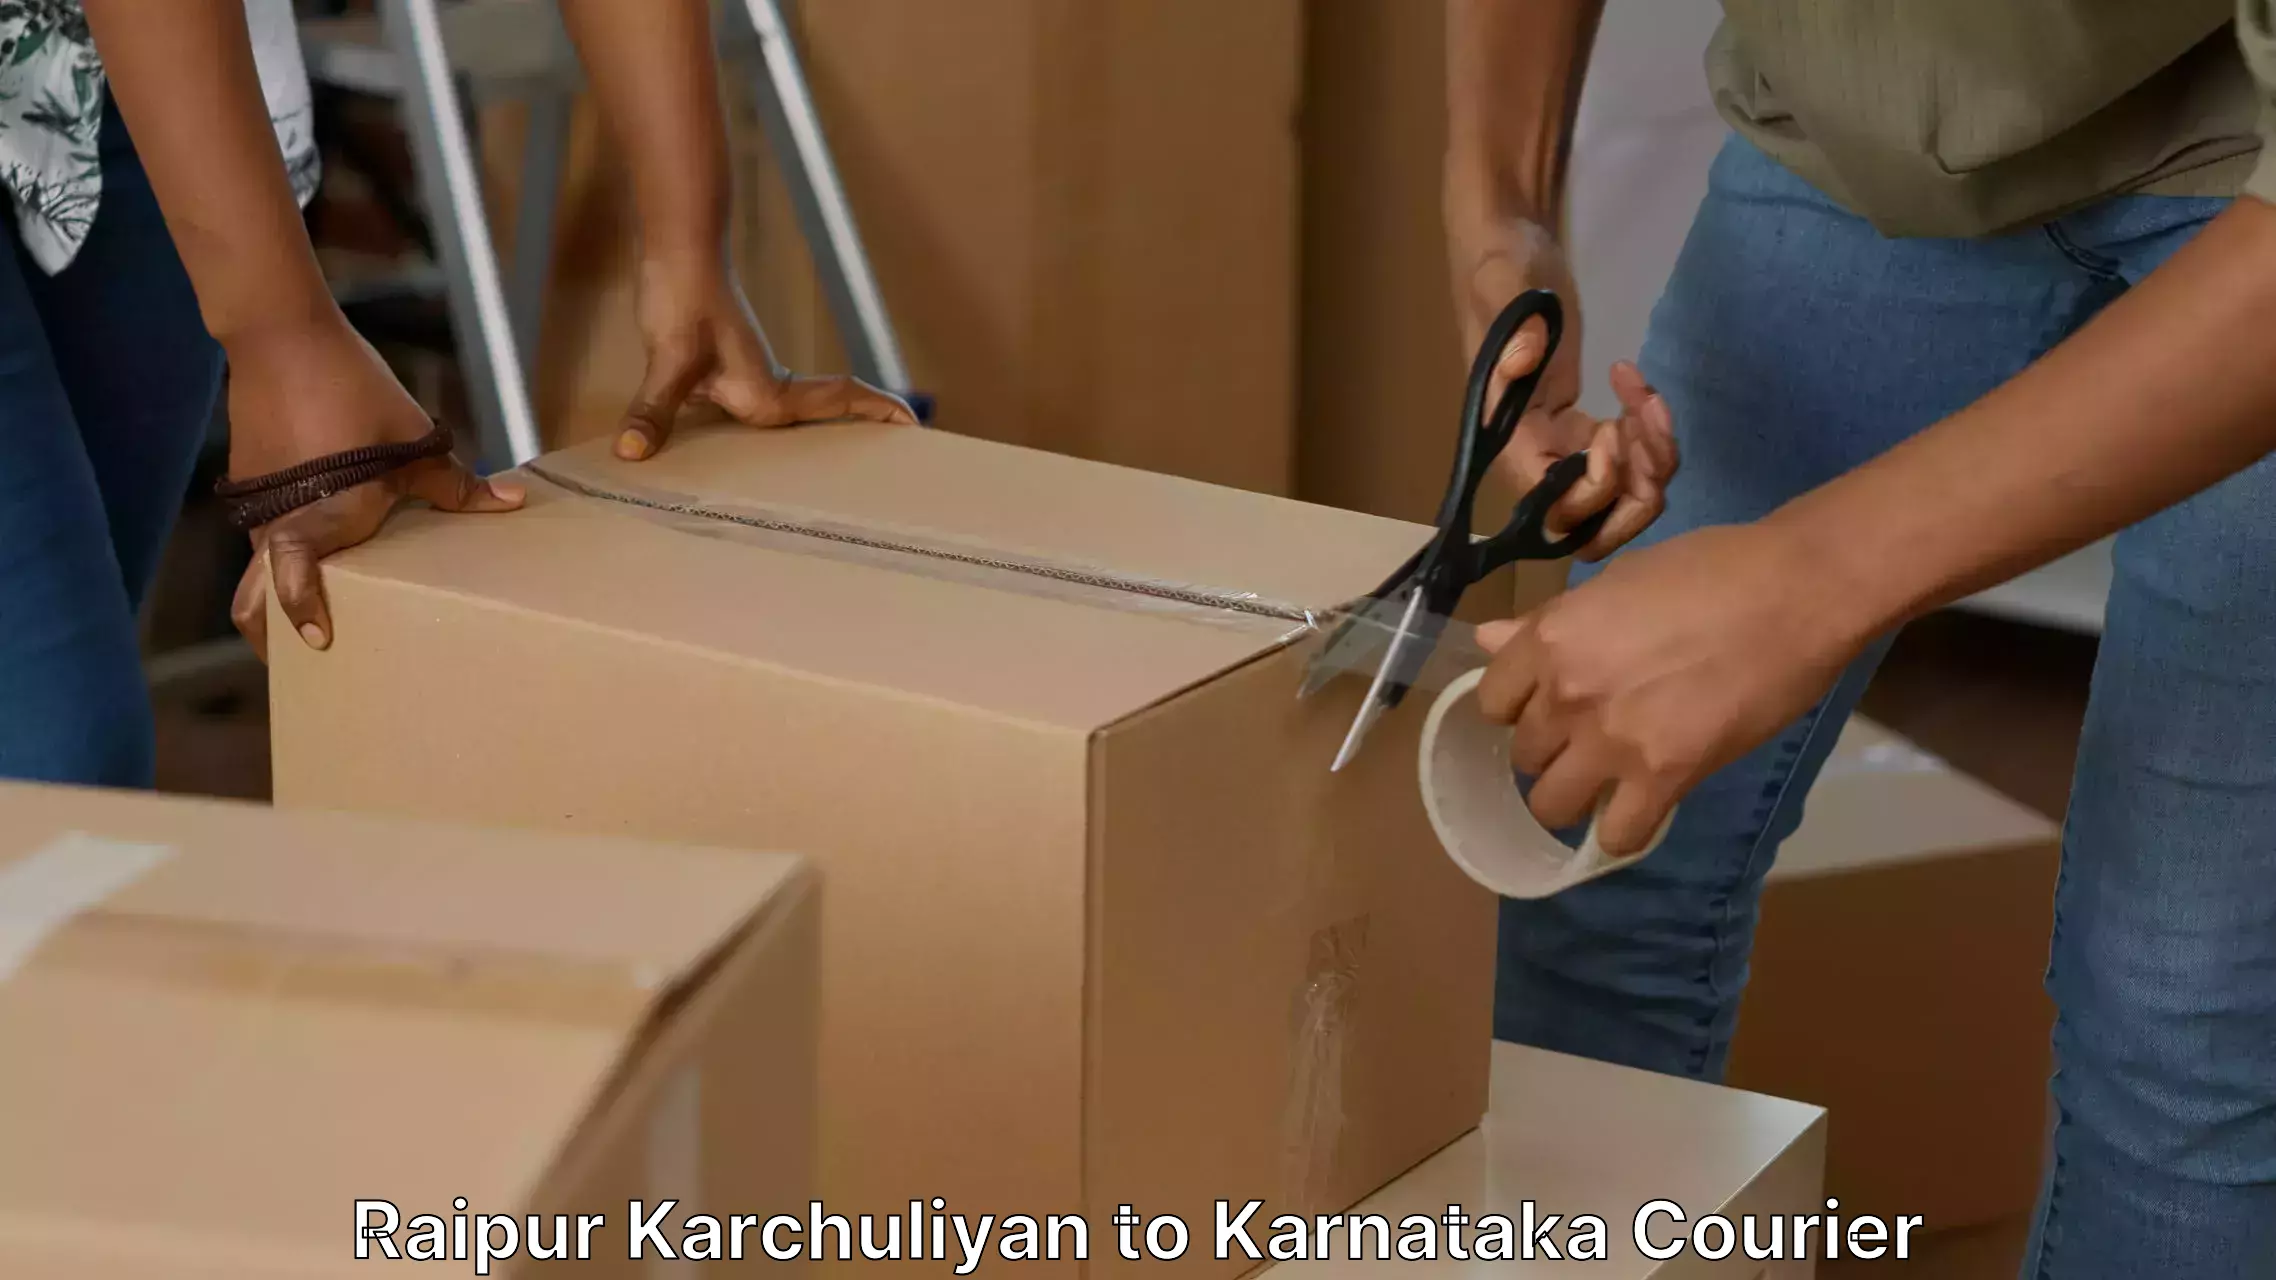 Furniture relocation experts Raipur Karchuliyan to Laxmeshwar